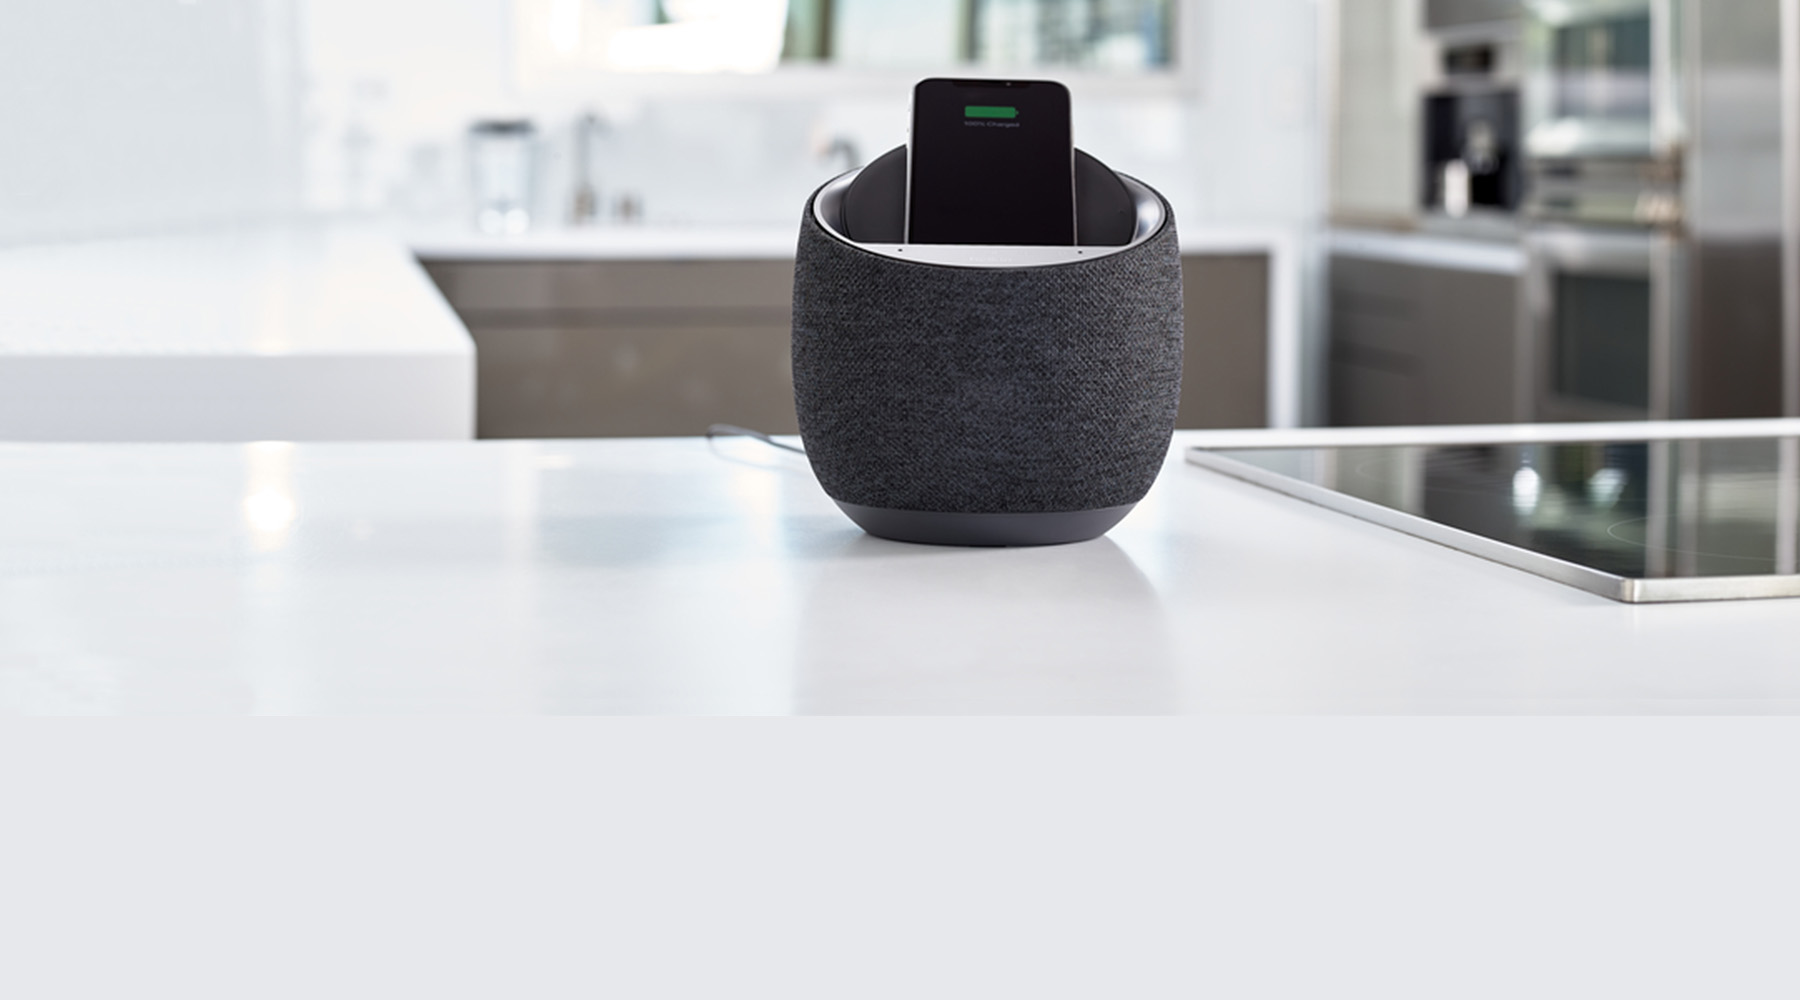 Belkin soundform elite smart speaker feature image